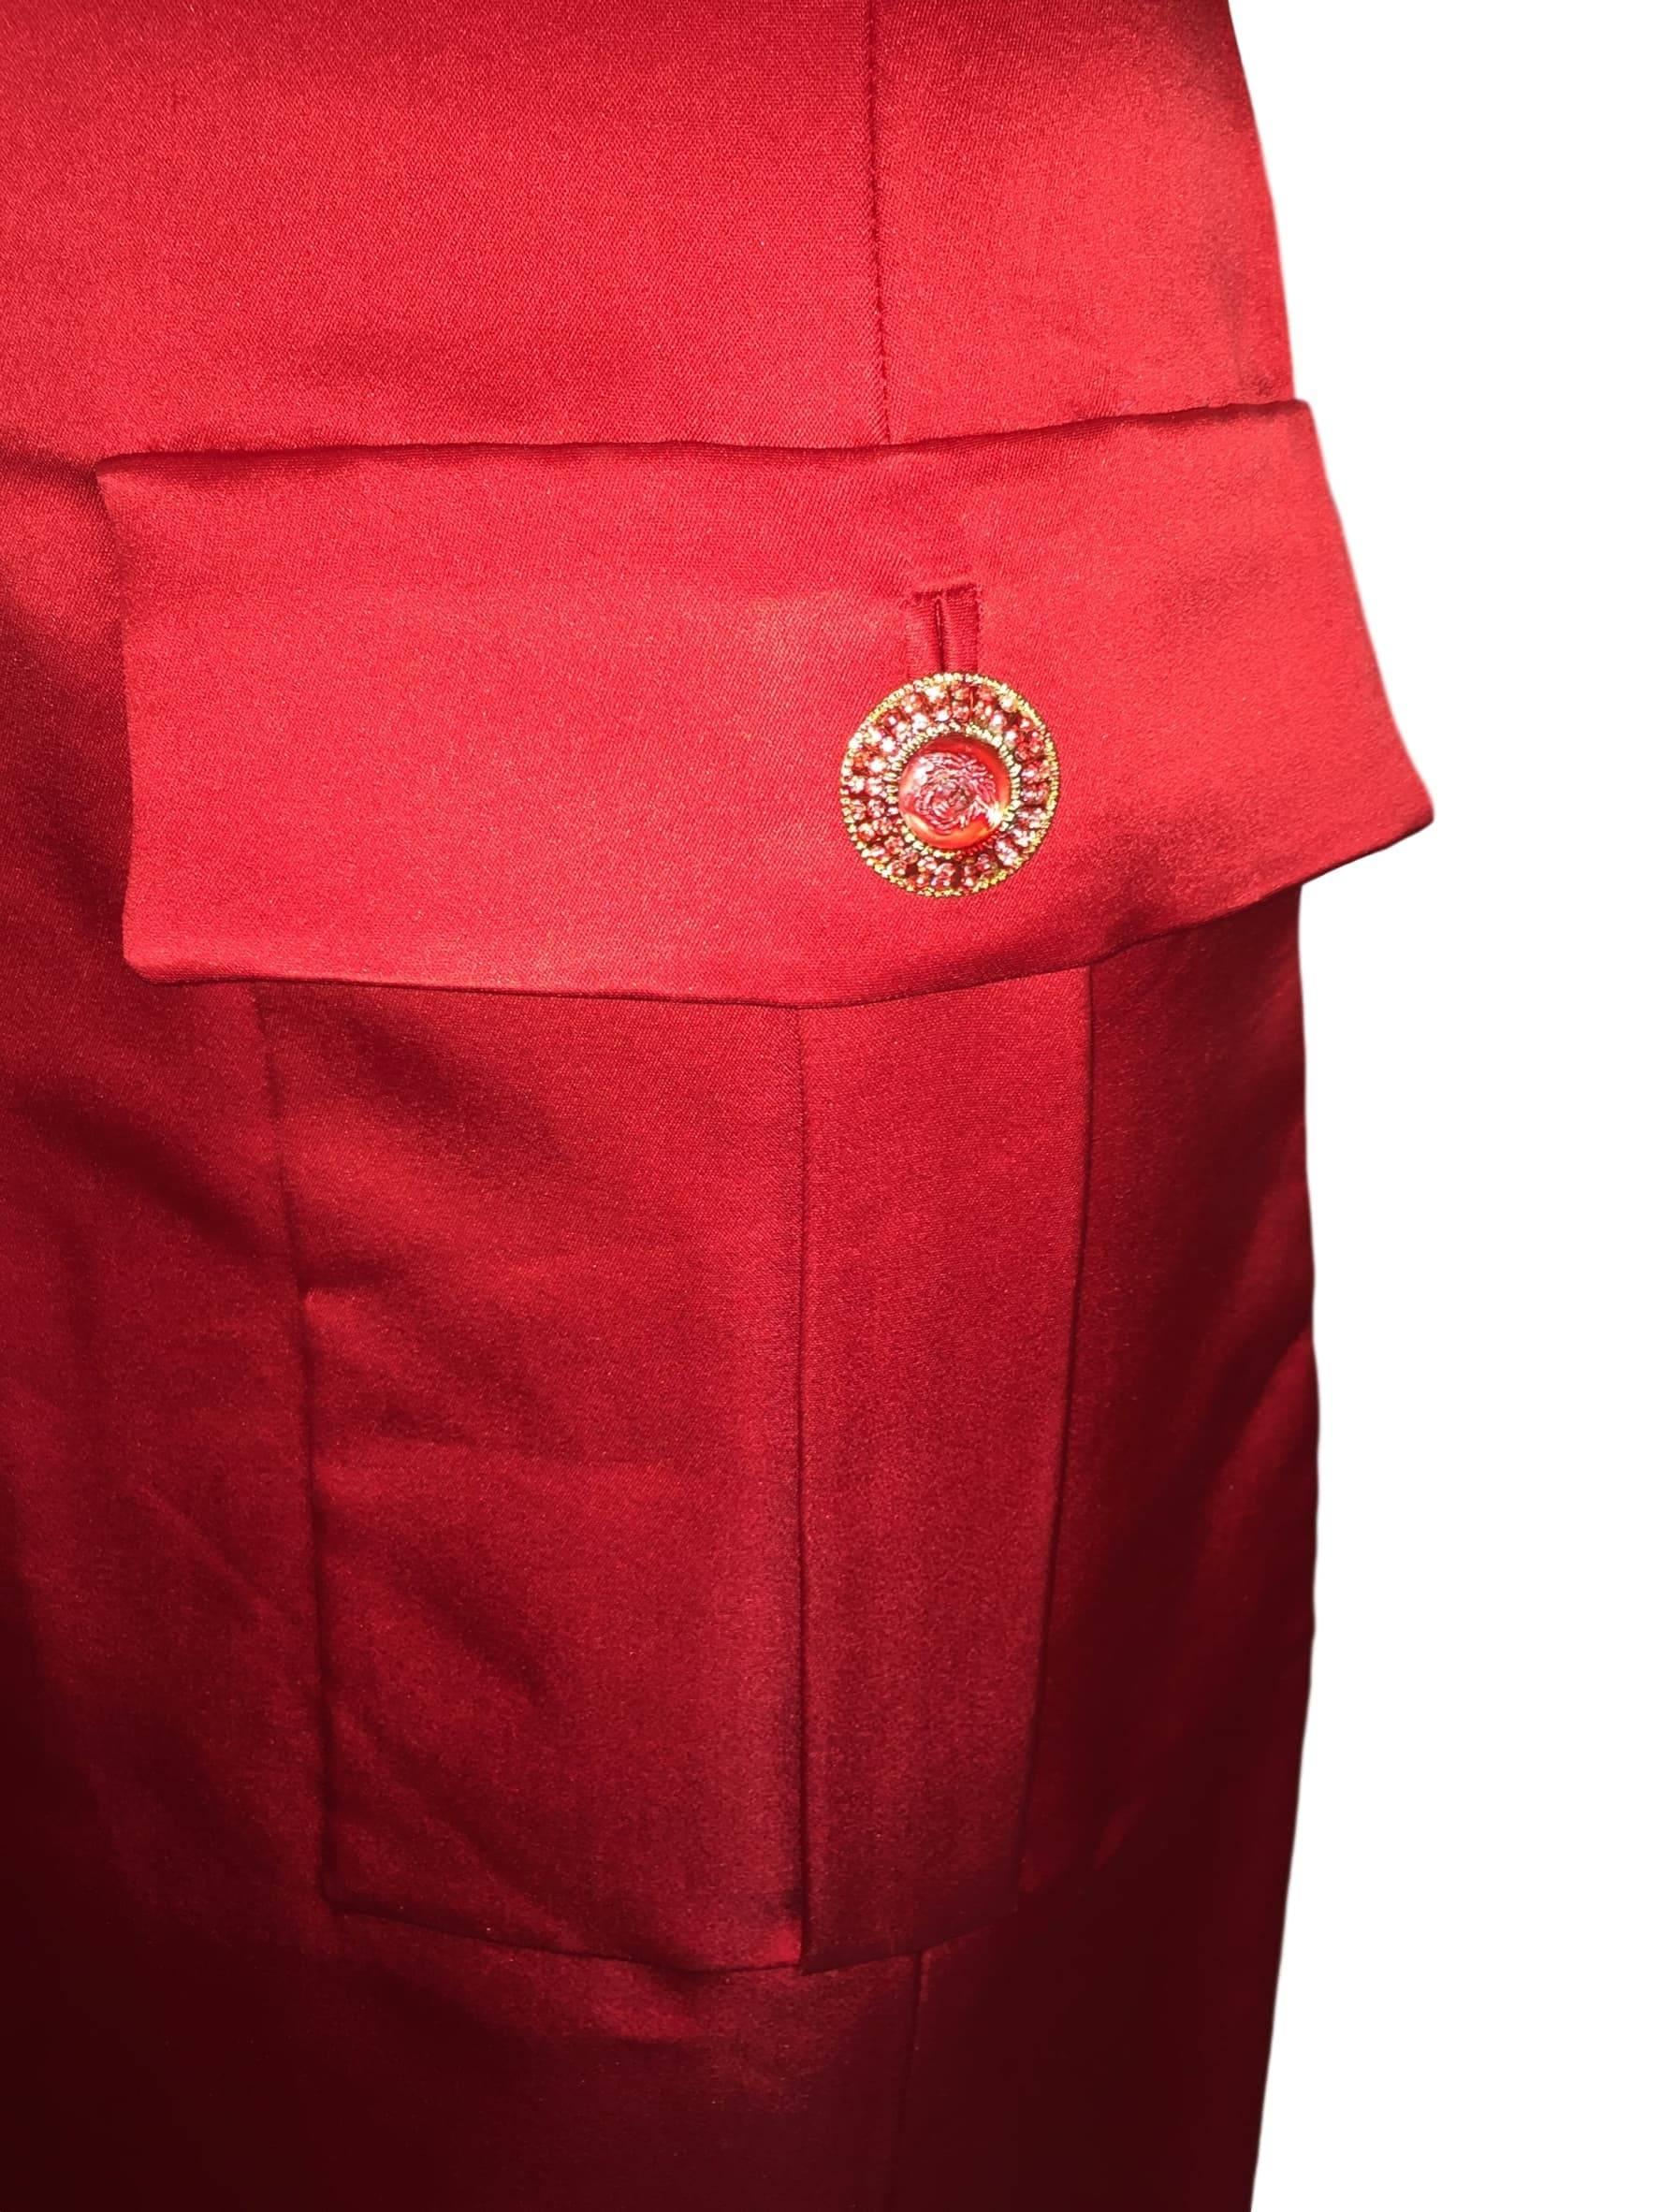 F/W 1996 Gianni Versace Runway Red Sheer Silk Gown Dress 1